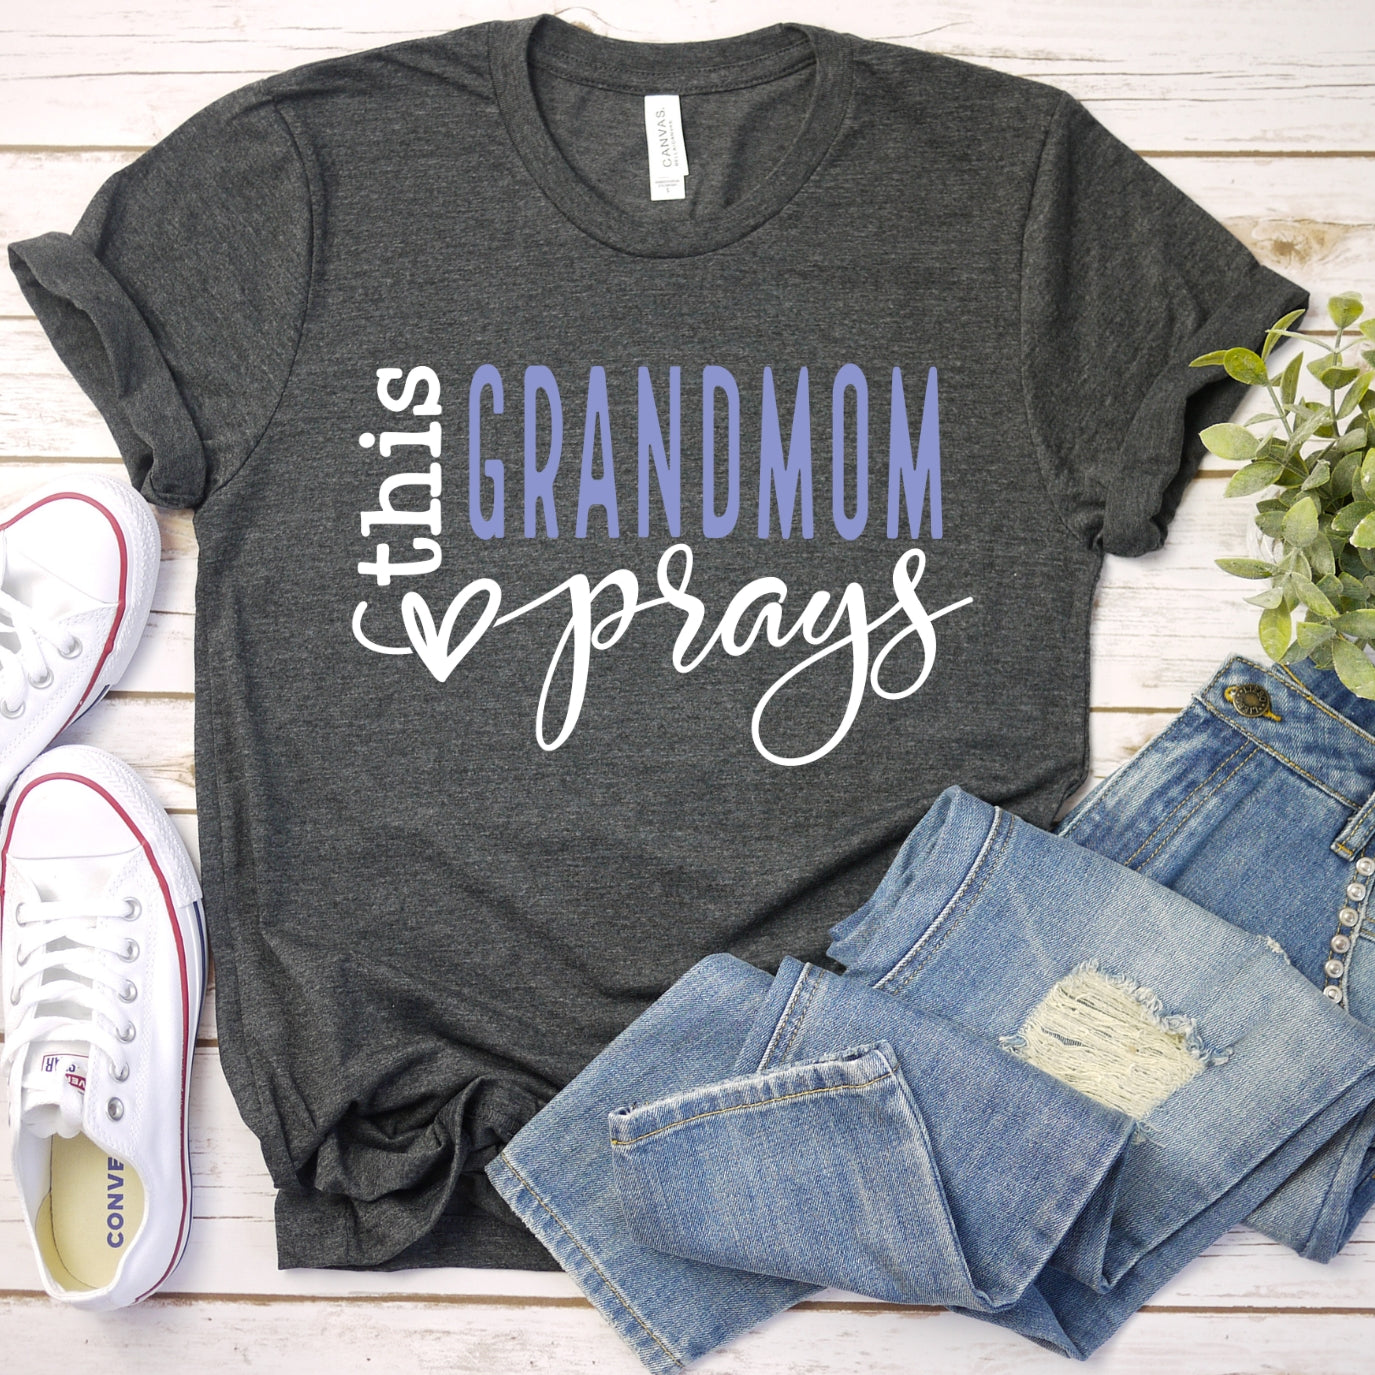 This Grandmom Prays Women's T-Shirt